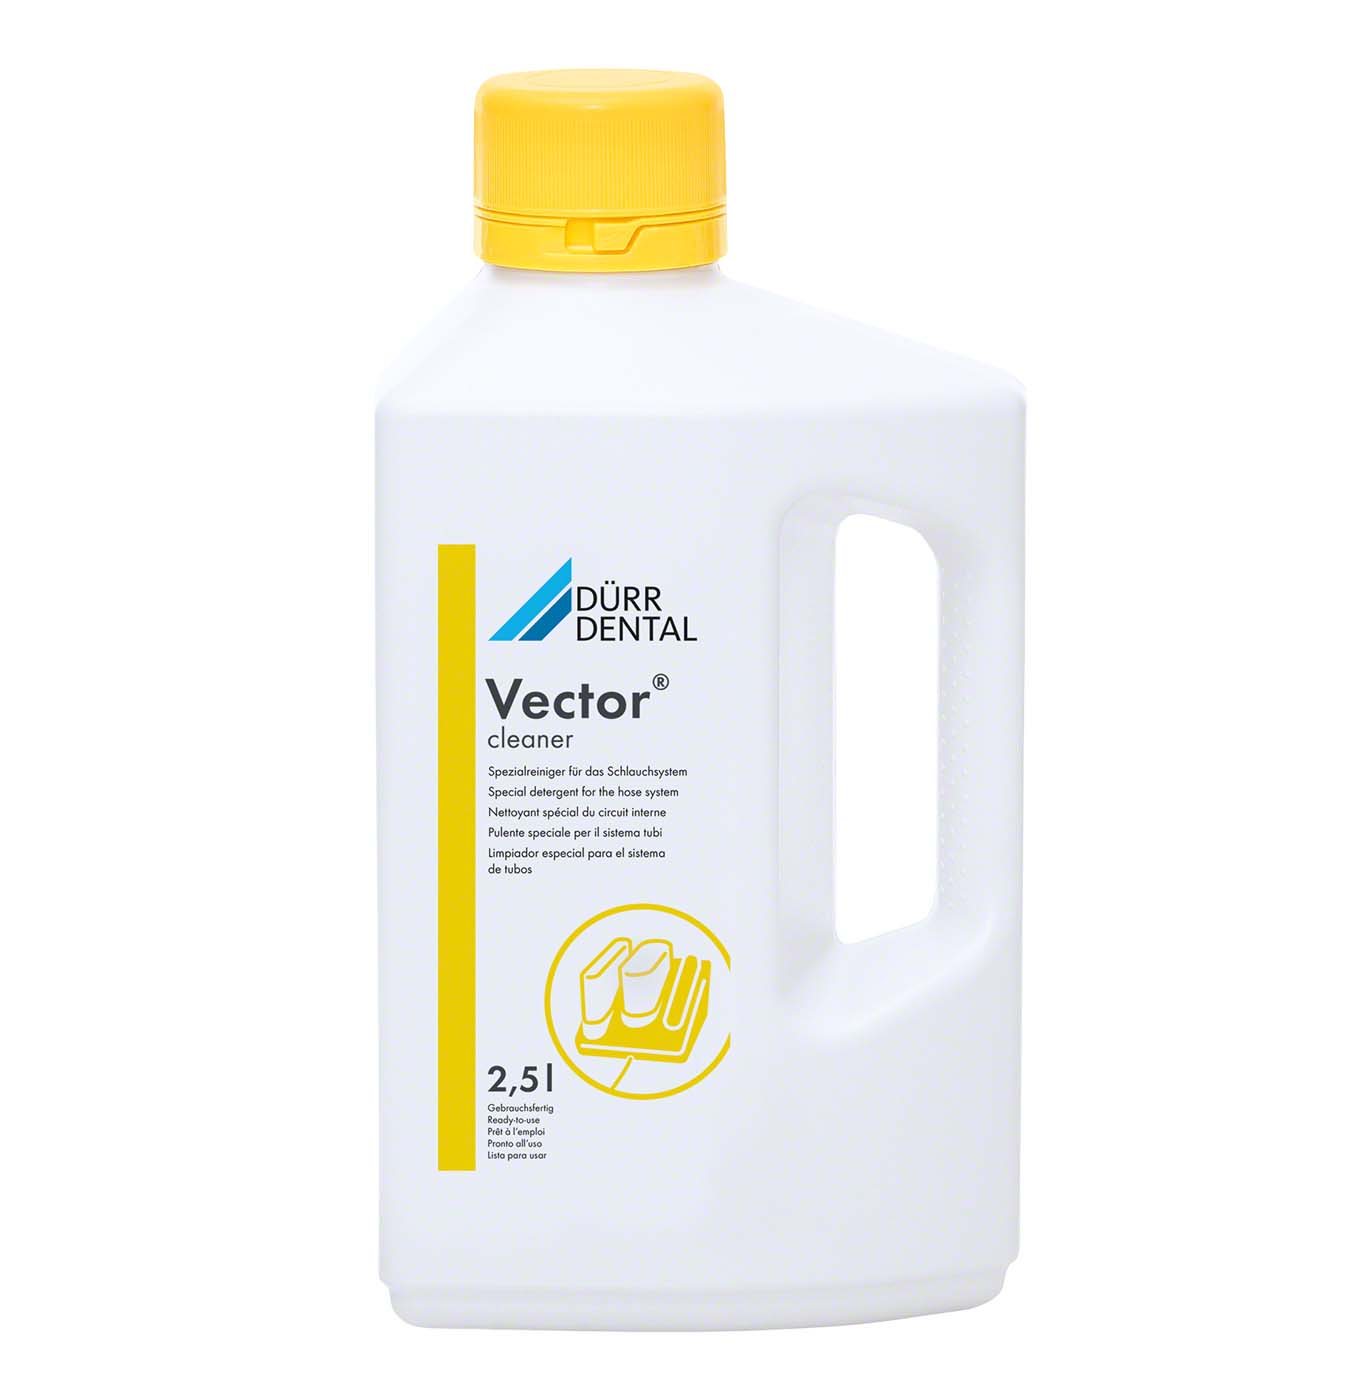 Vector® cleaner Dürr Dental